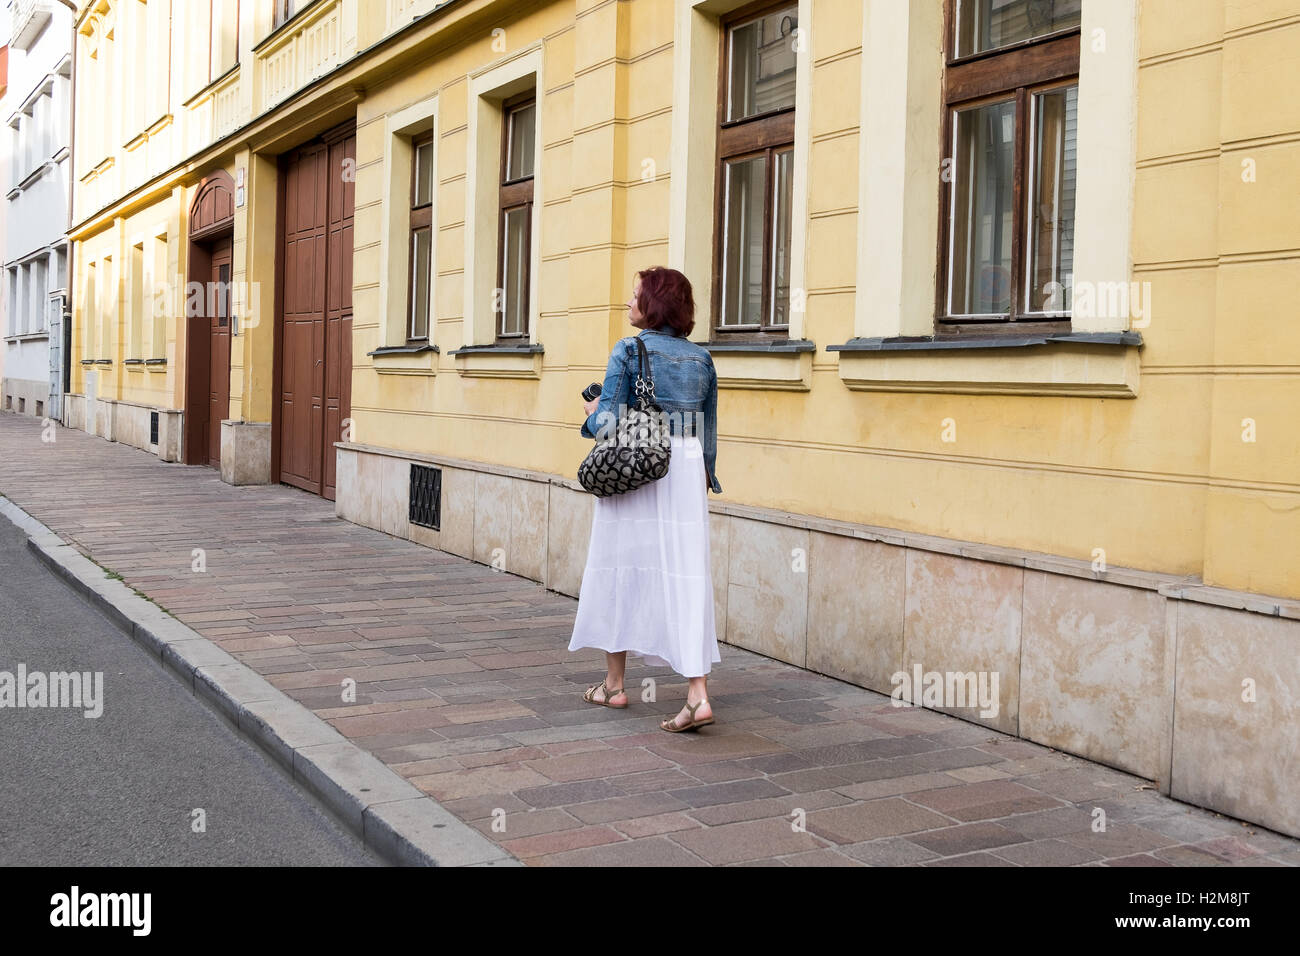 Woman in a dress walking down a street. Stock Photo